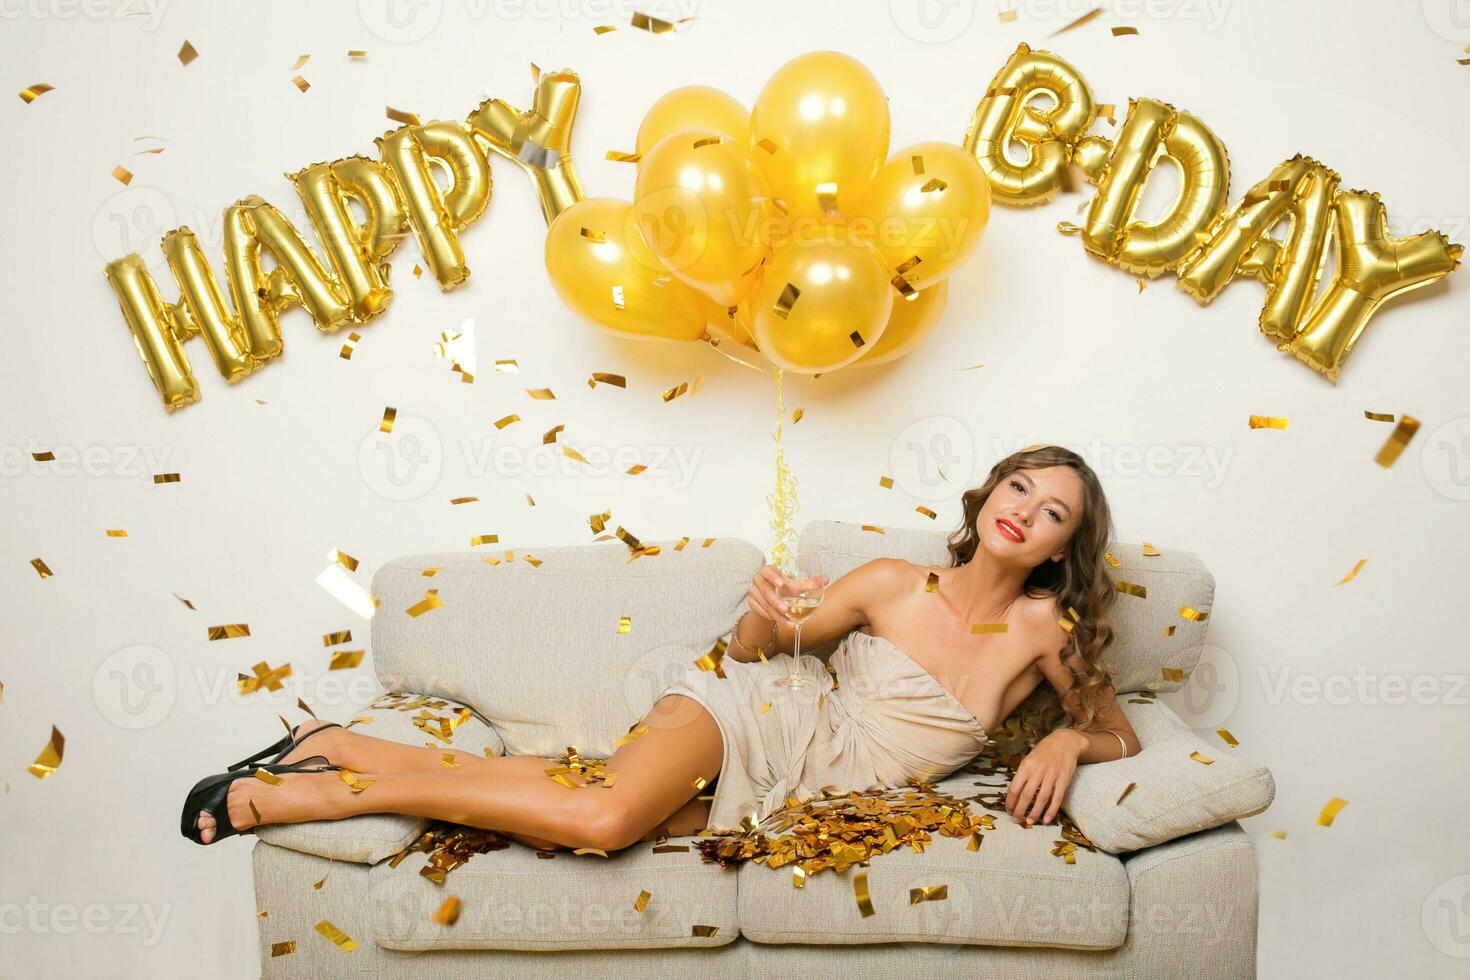 bonita mulher a comemorar festa dentro dourado confete foto